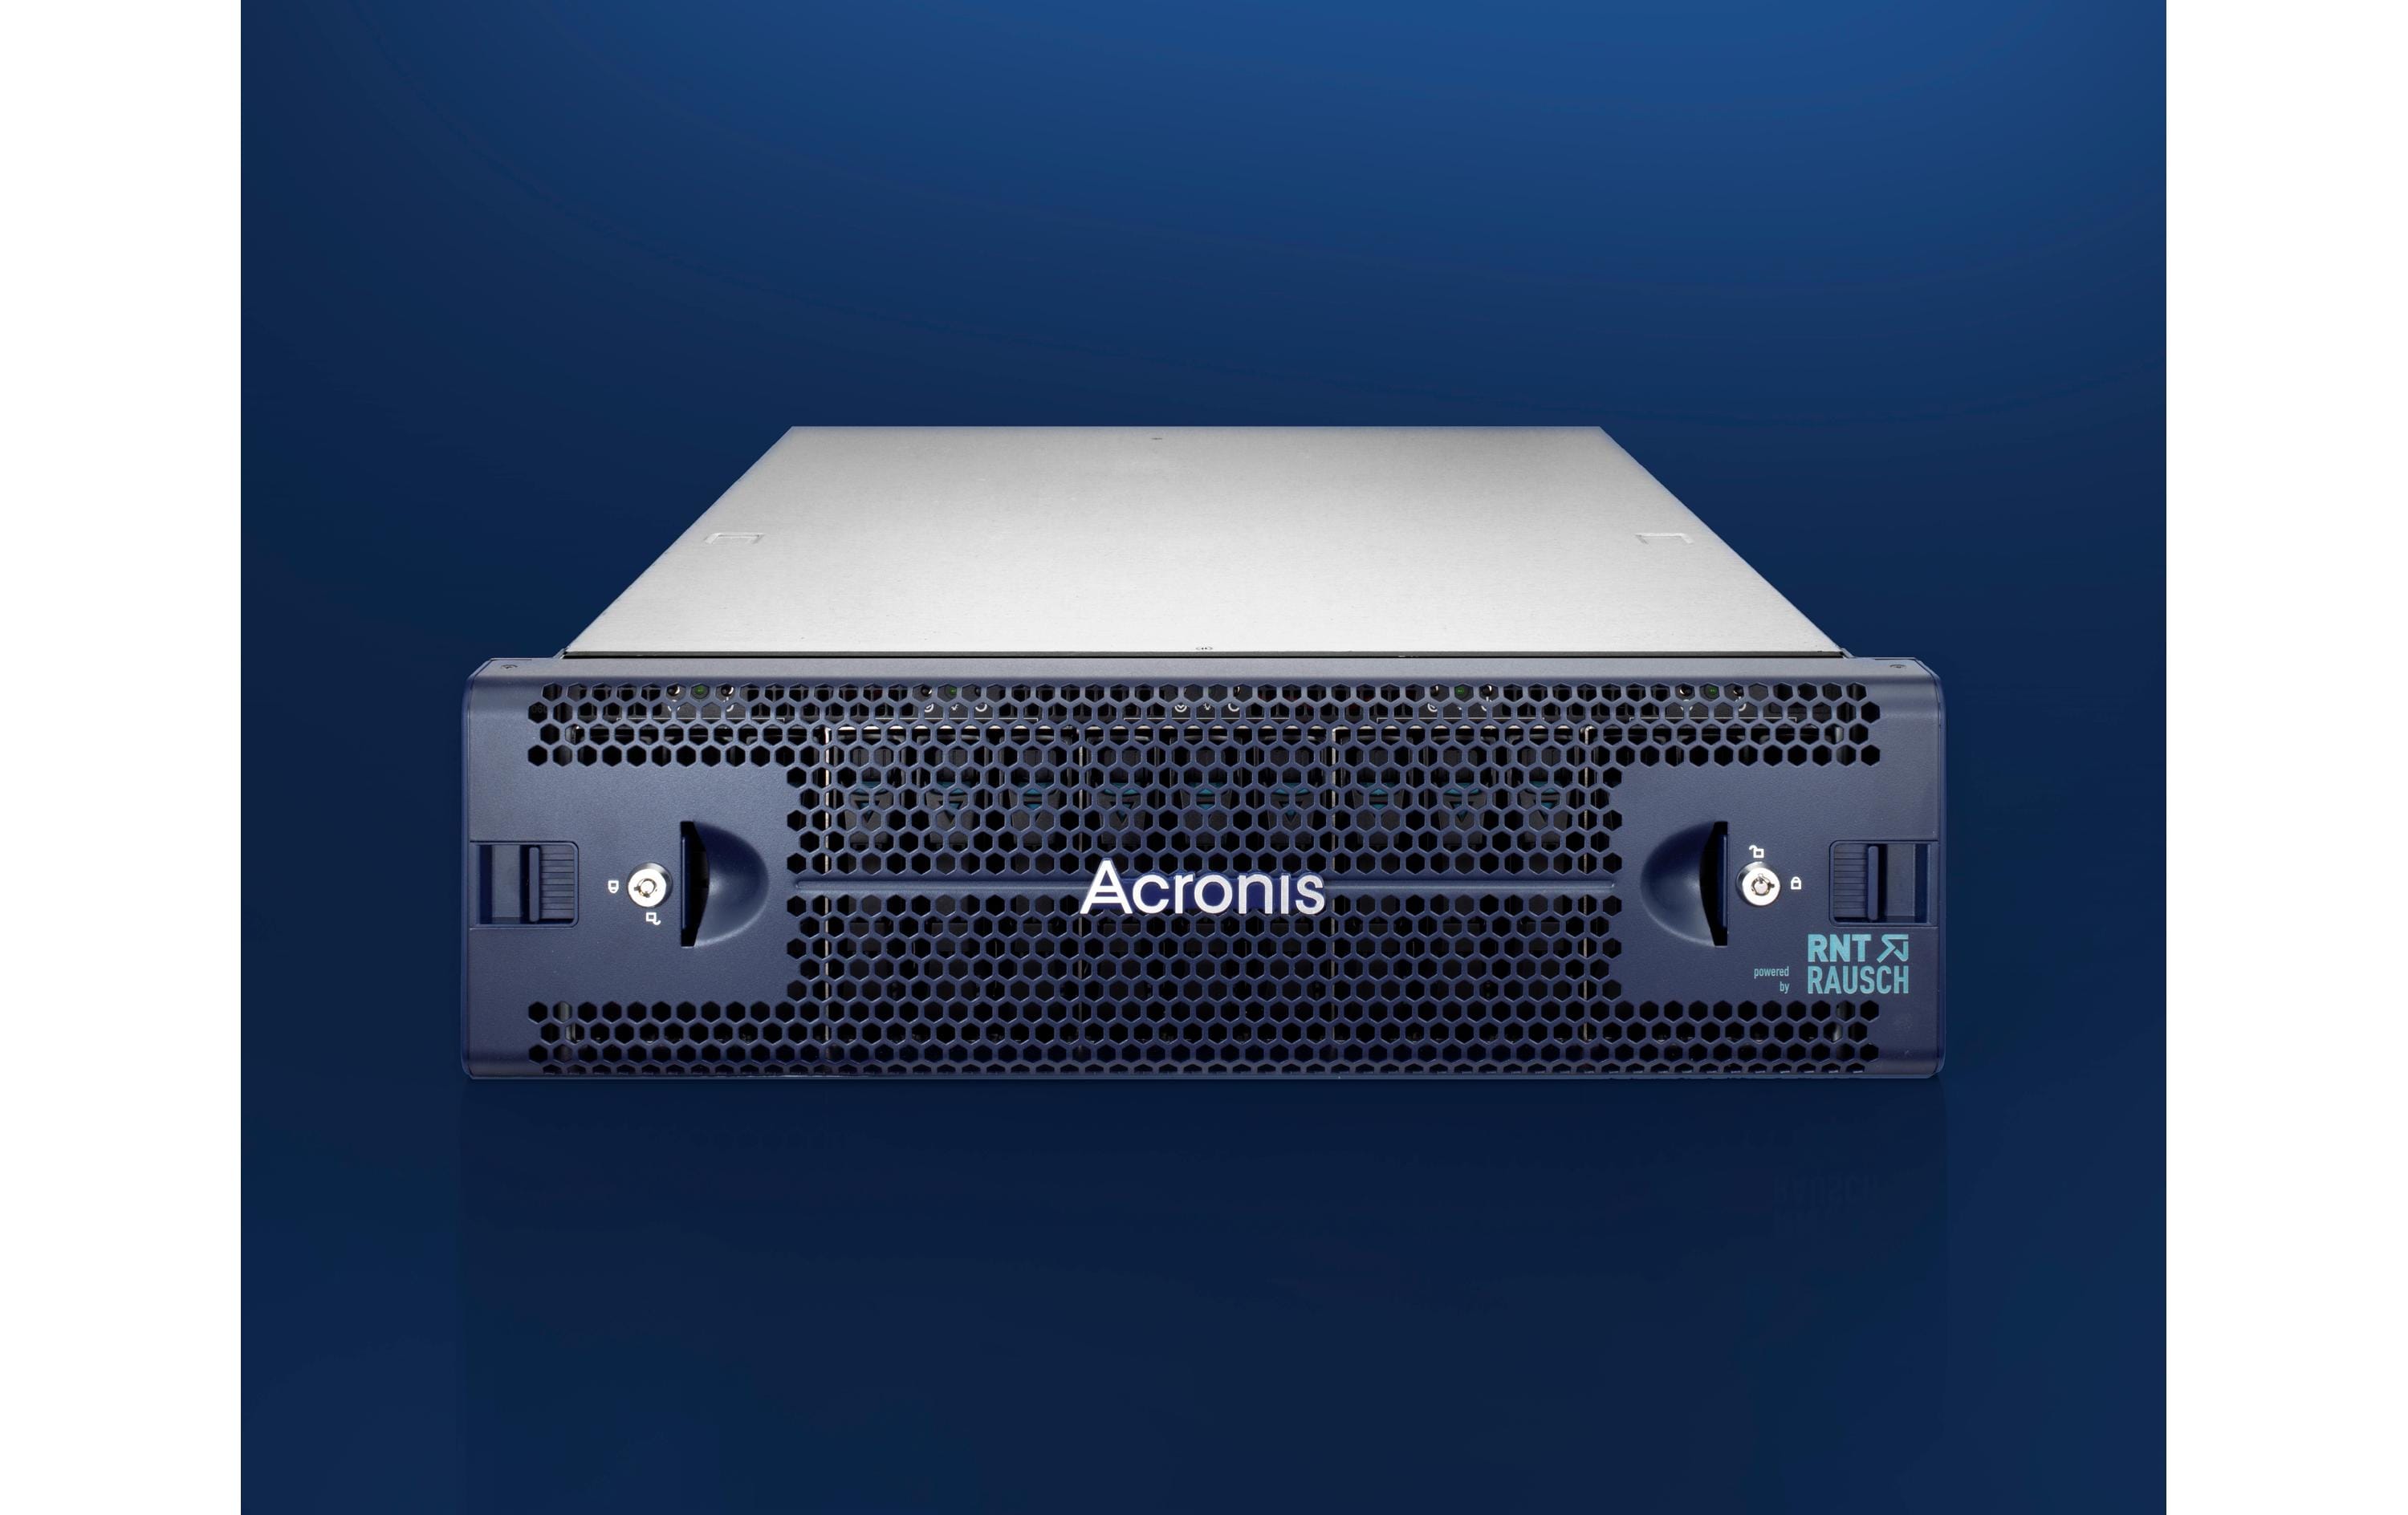 Acronis Hardware & HW Services Cyber Appliance 15078 HW, 78 TB, für Service Provider